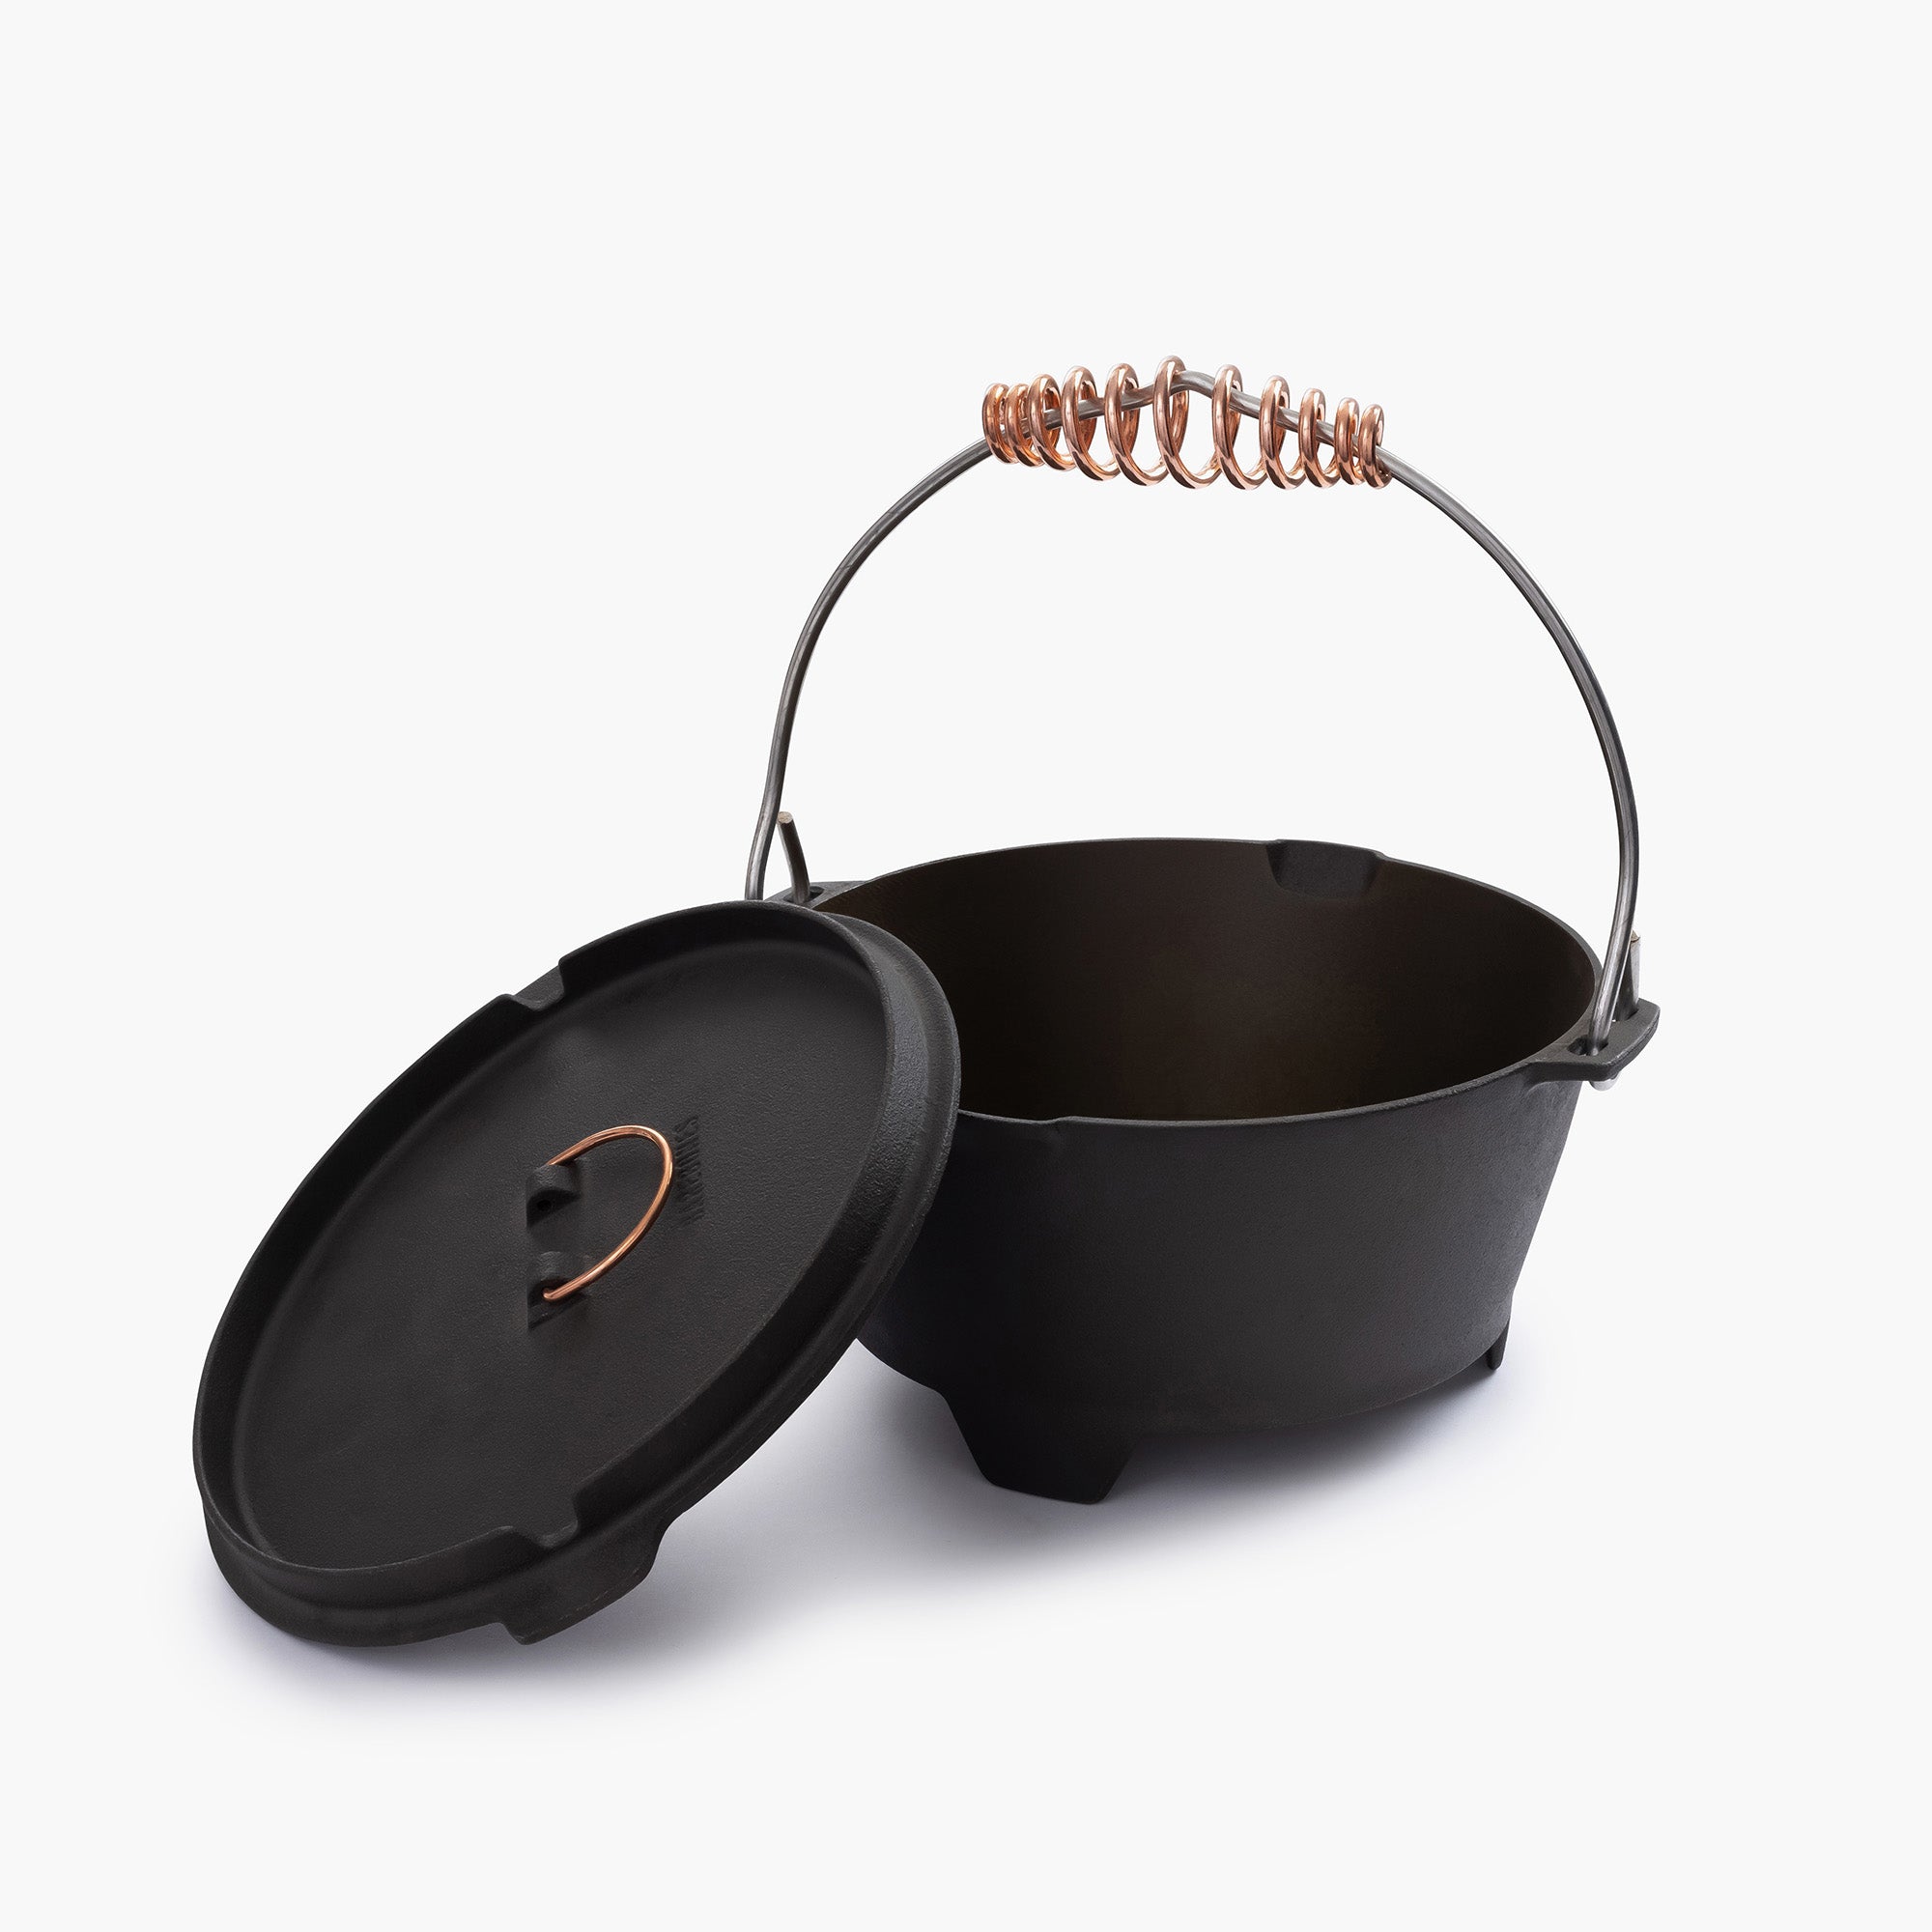 Surface Premium Enameled Cast Iron Pot in Black